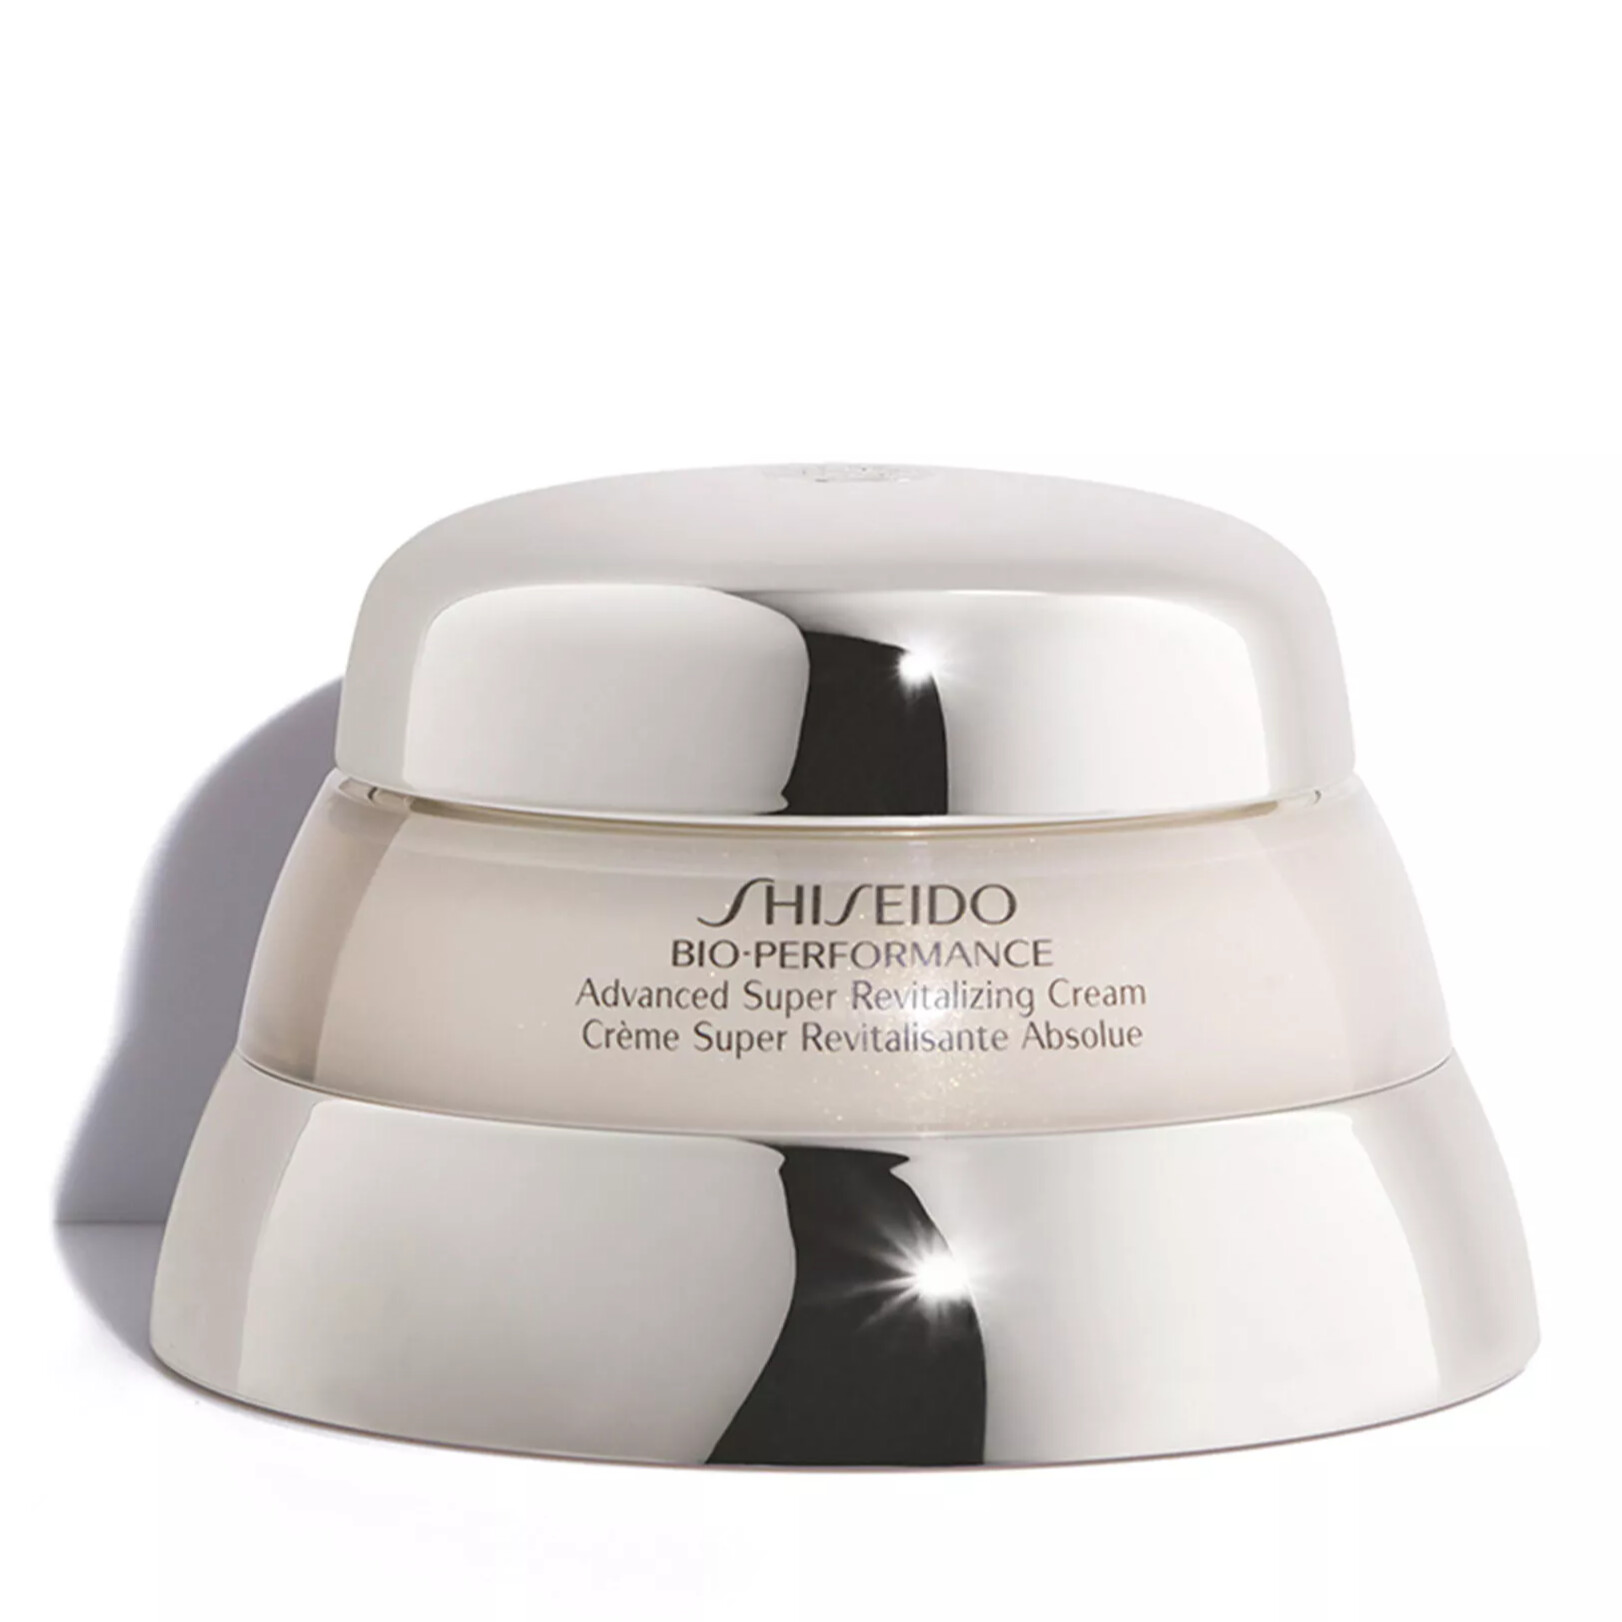 Gesichtspflege Shiseido Bio-Performance Advanced Super Revitalizing Cream 75ml kaufen